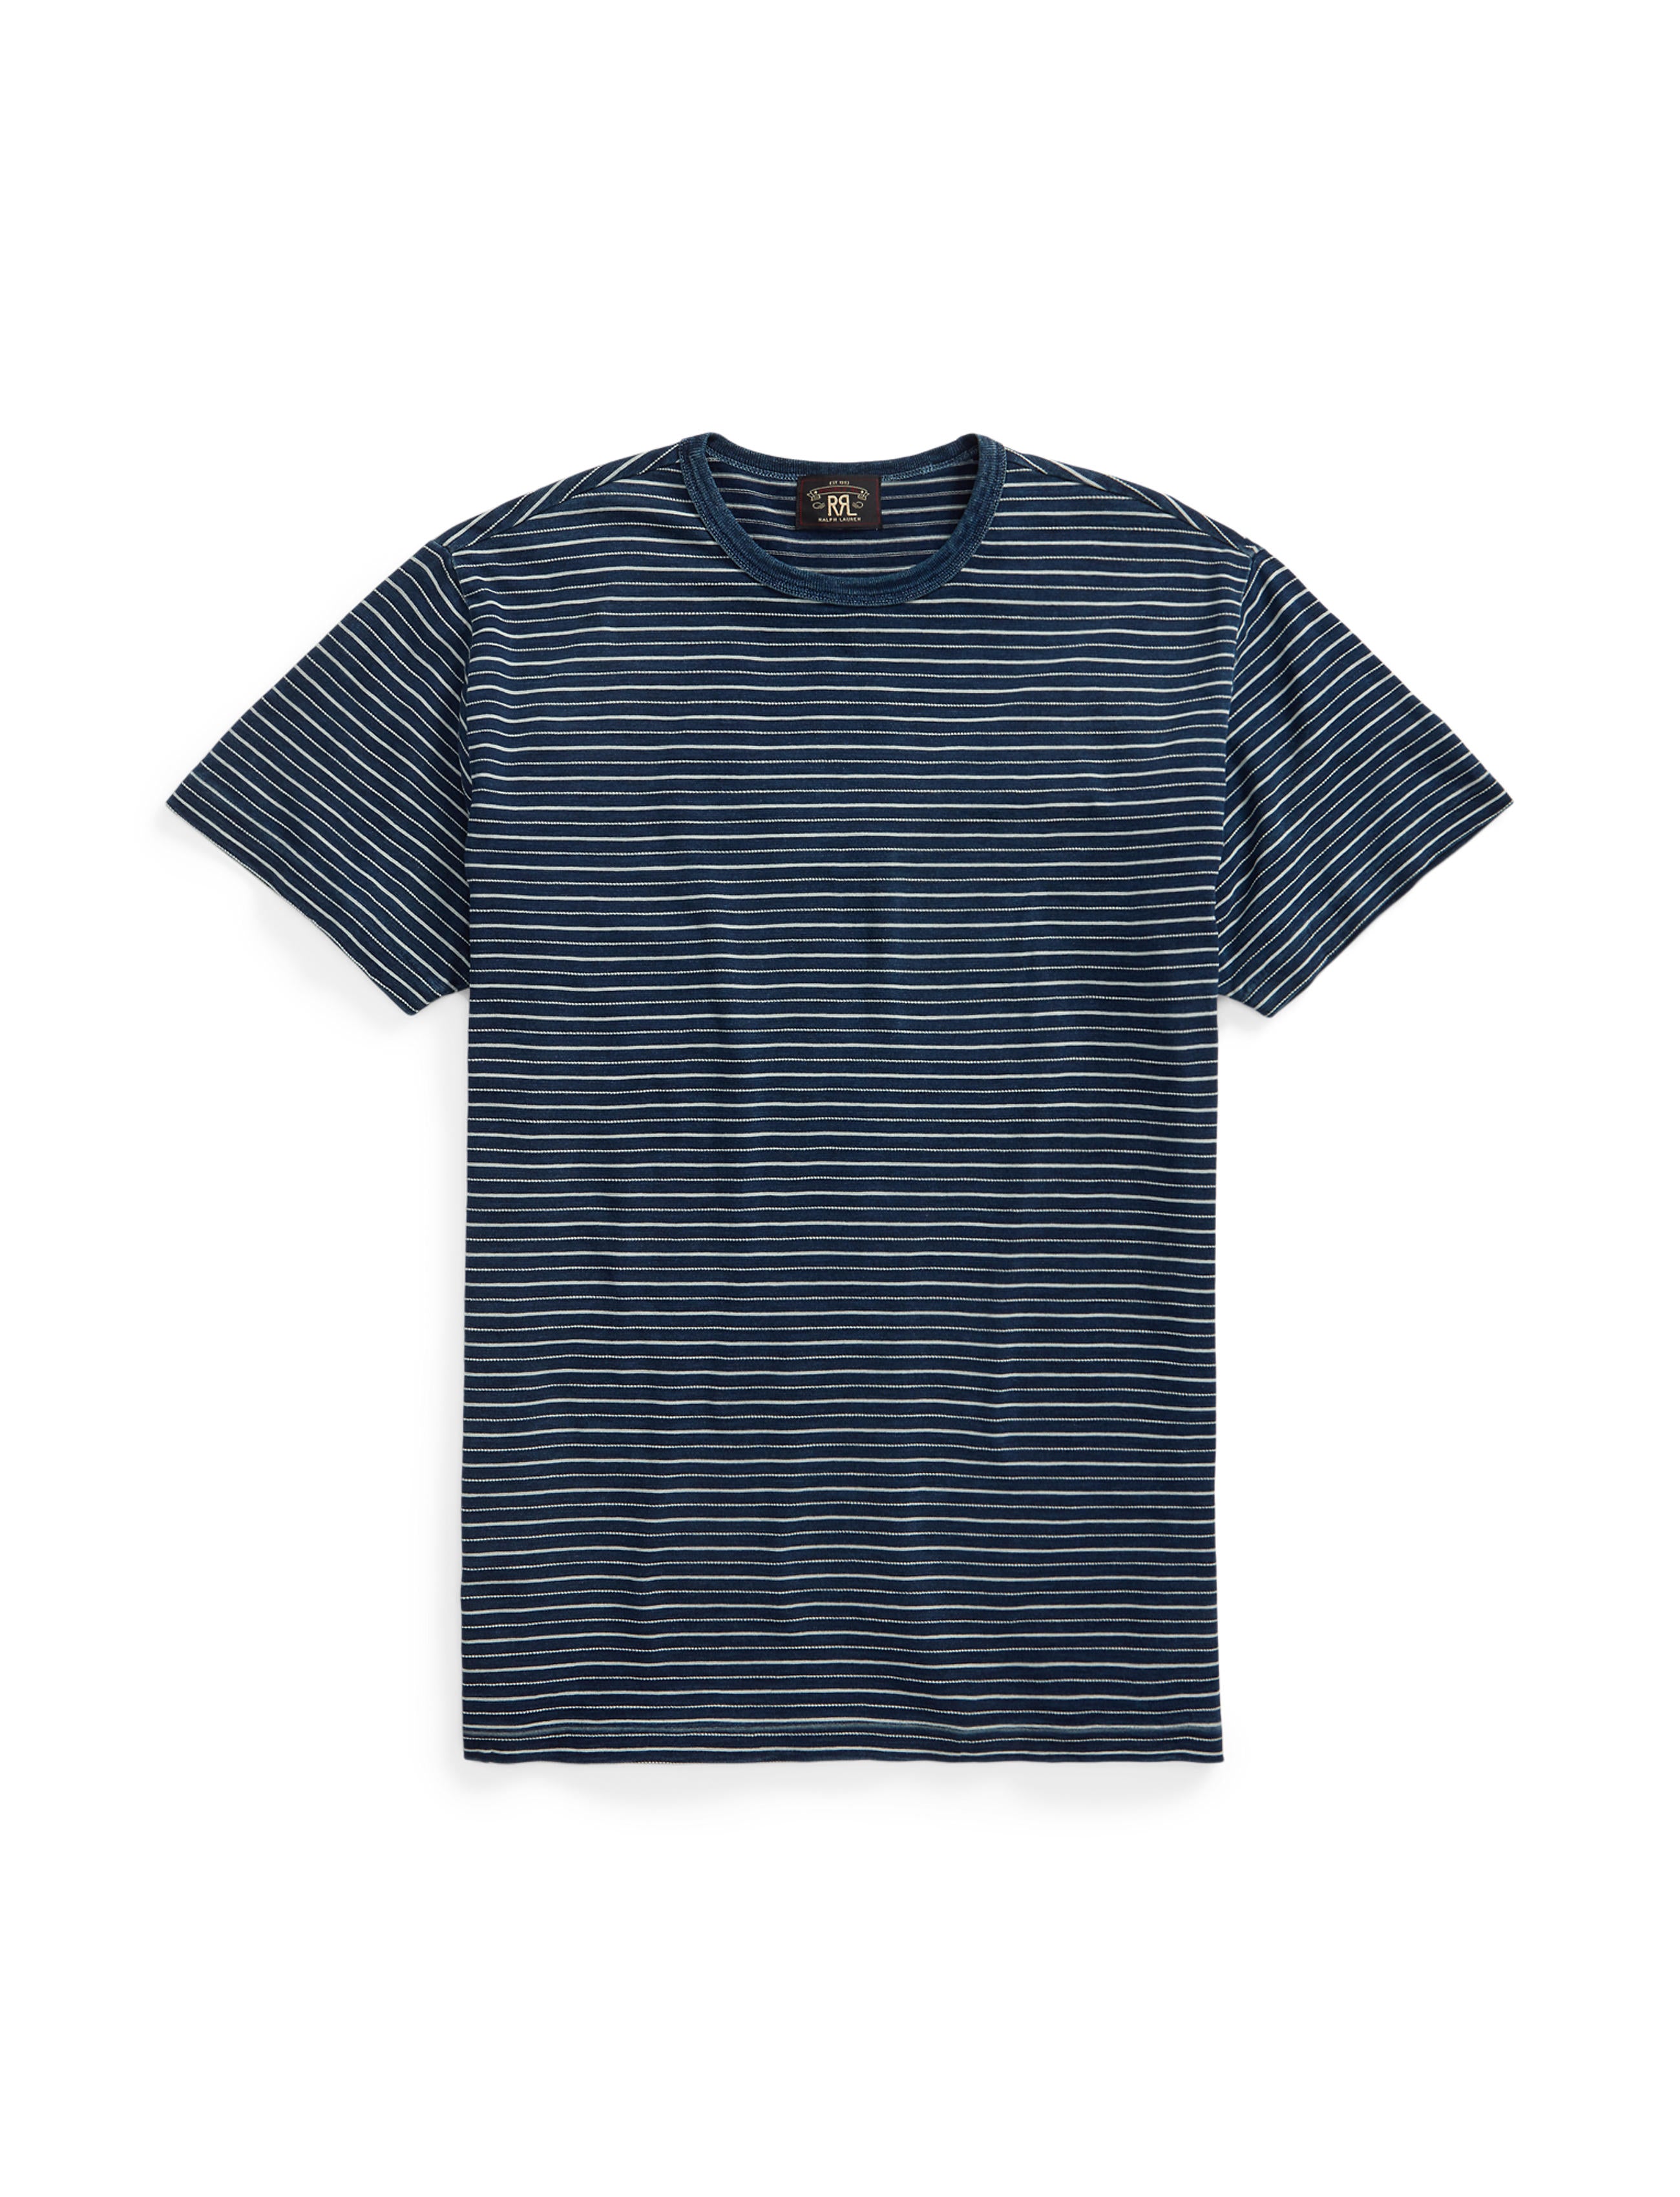 Indigo Striped Jersey T-Shirt / Indigo Stripe